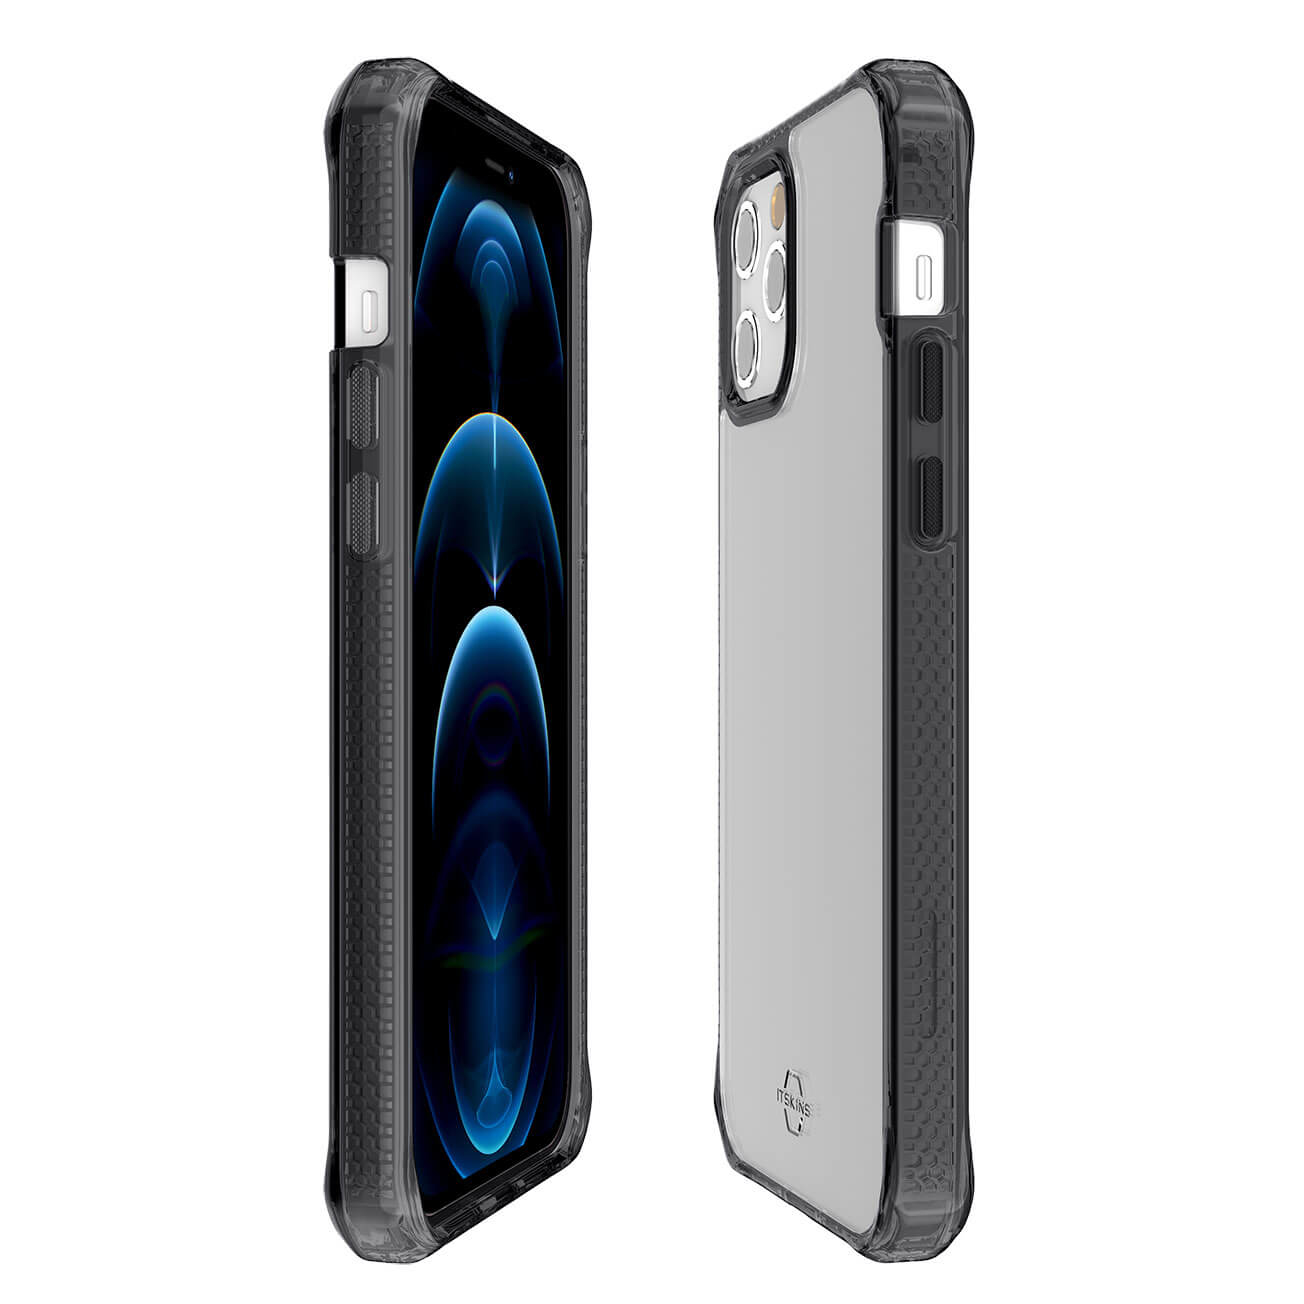 ITskins Hybride Clear Apple iPhone 12 Pro Max schwarz/transparent